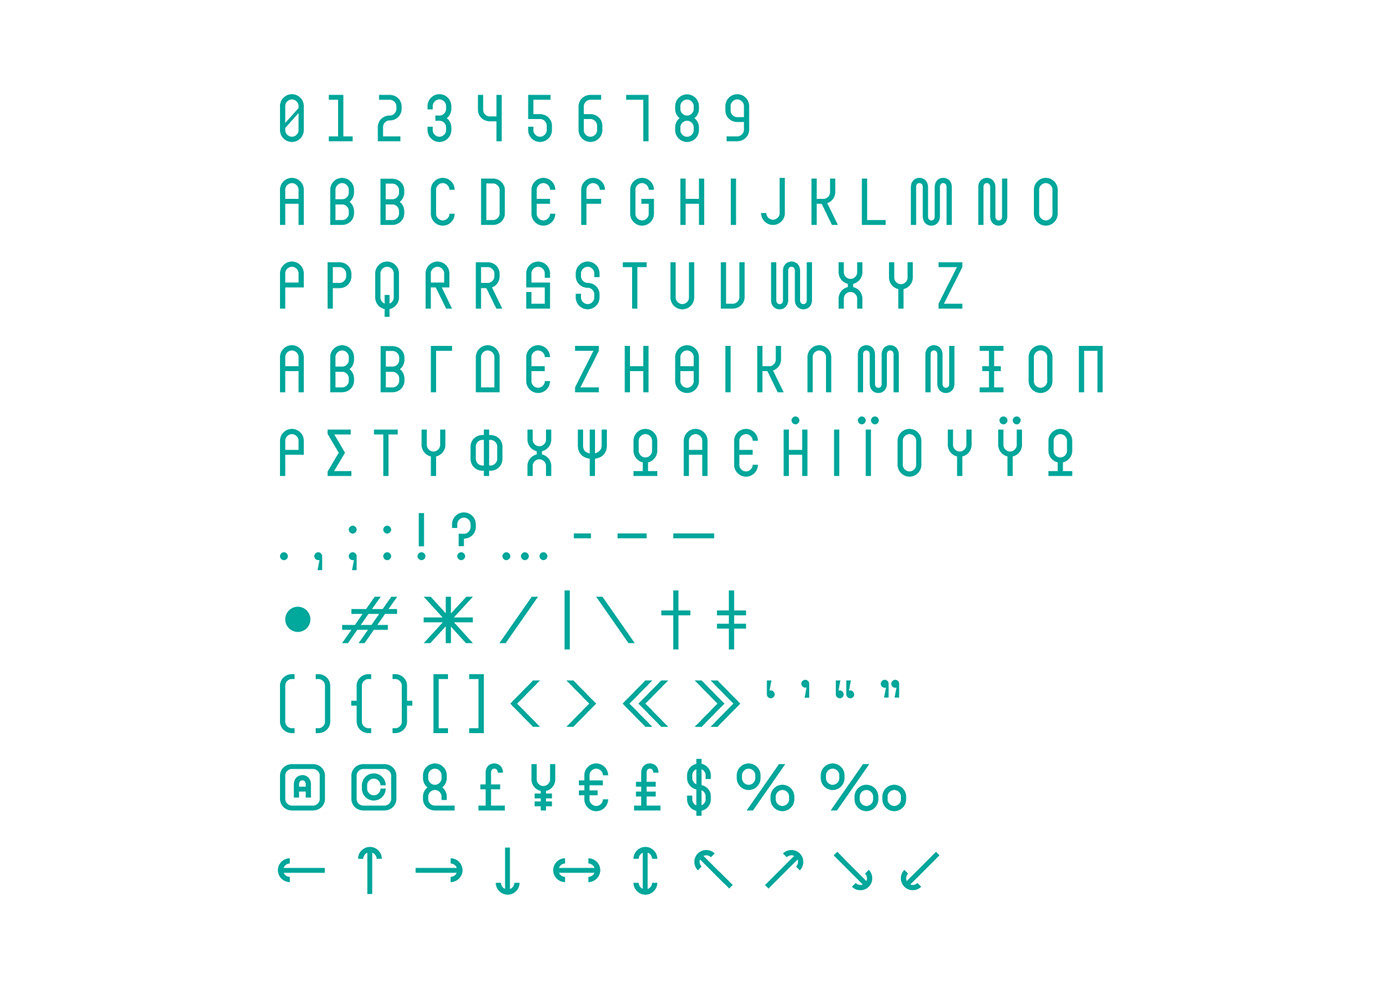 papamarkou font type Typeface Street Urban experiment Display THESSALONIKI free